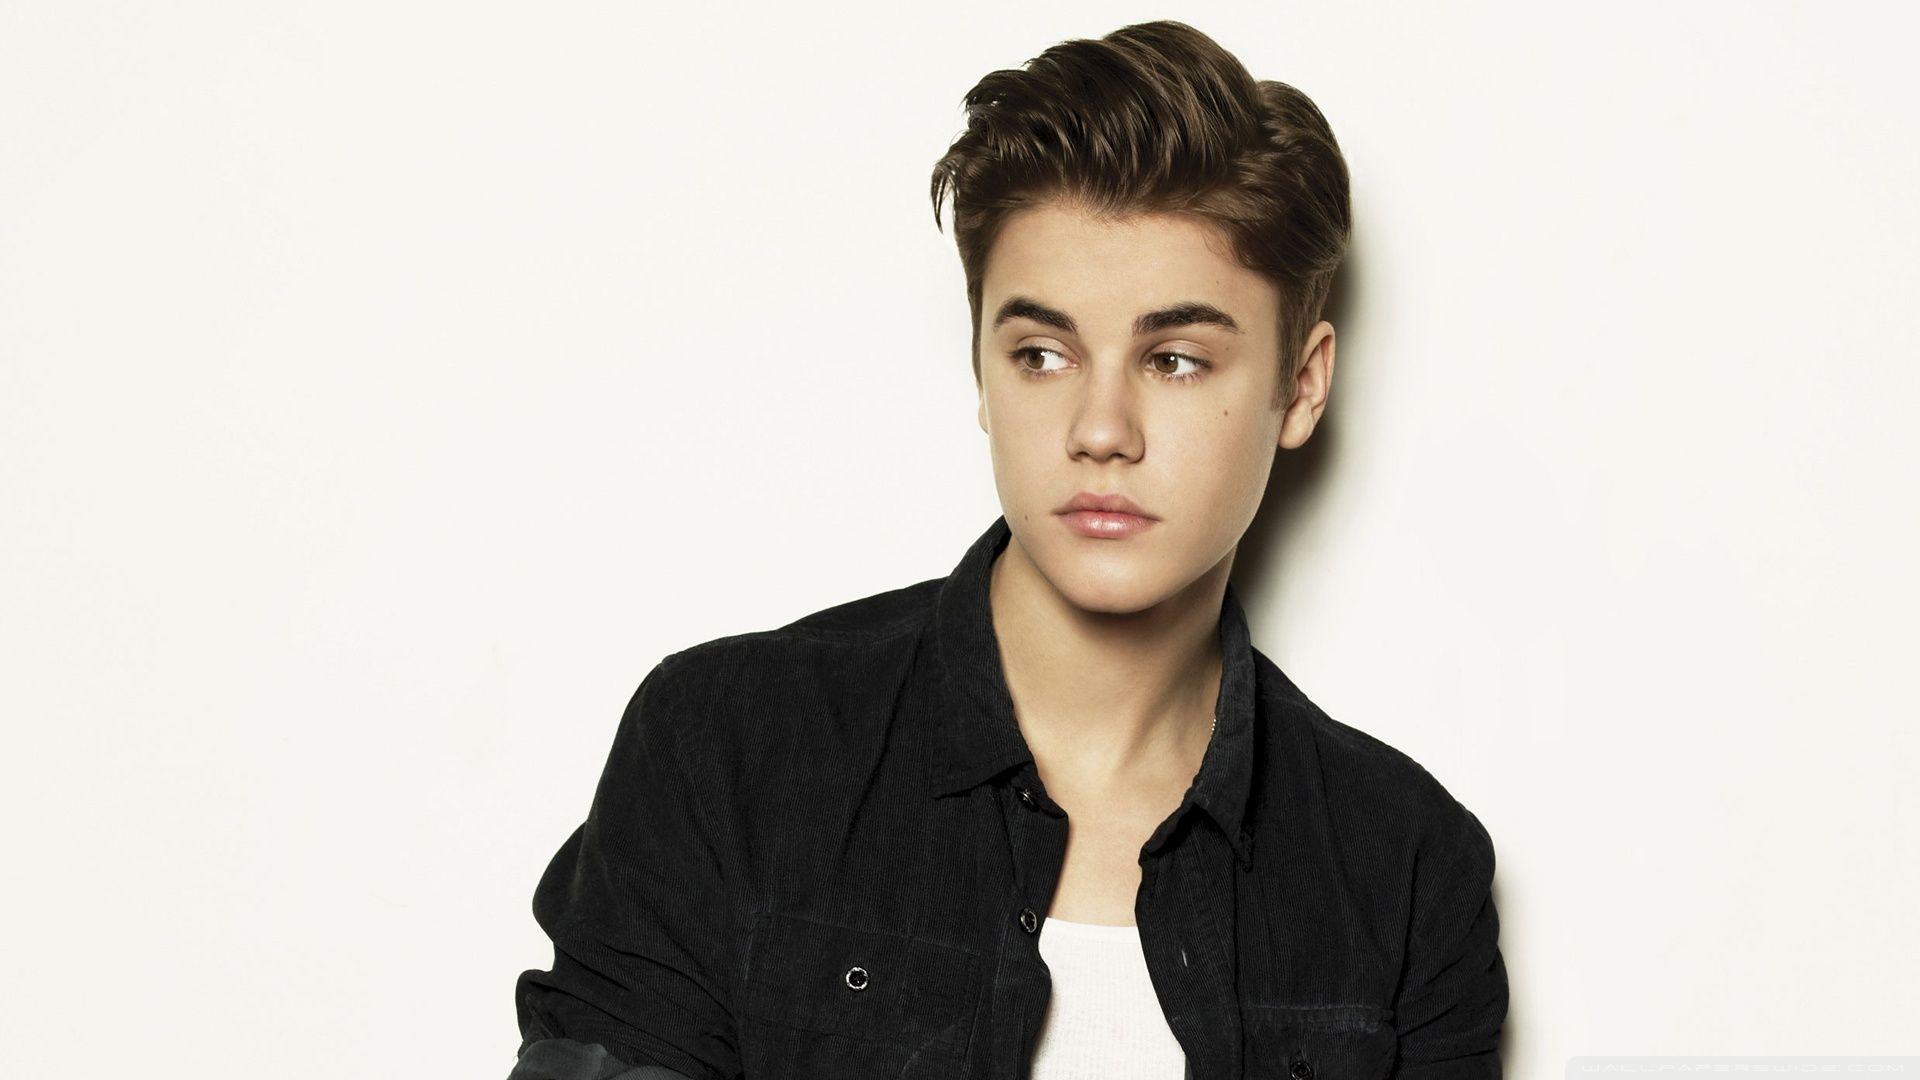 Justin Bieber Wallpaper HD Background, Image, Pics, Photo Free